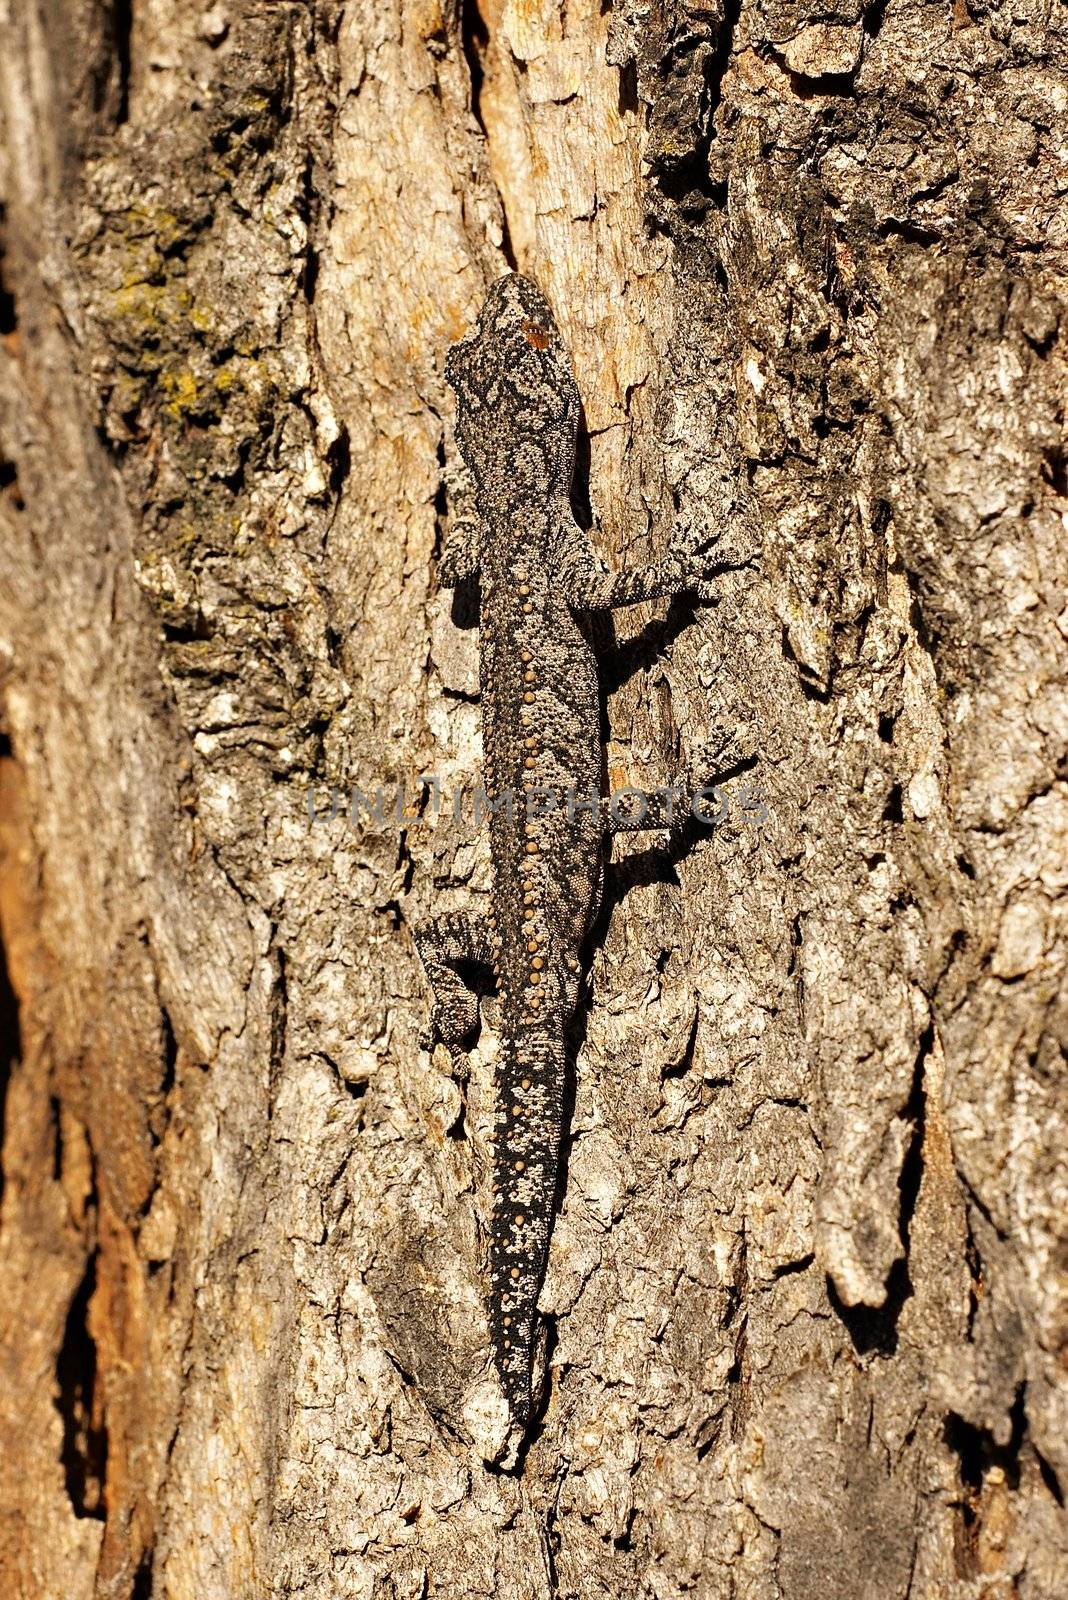 strophurus intermedius gecko showing camouflage ability